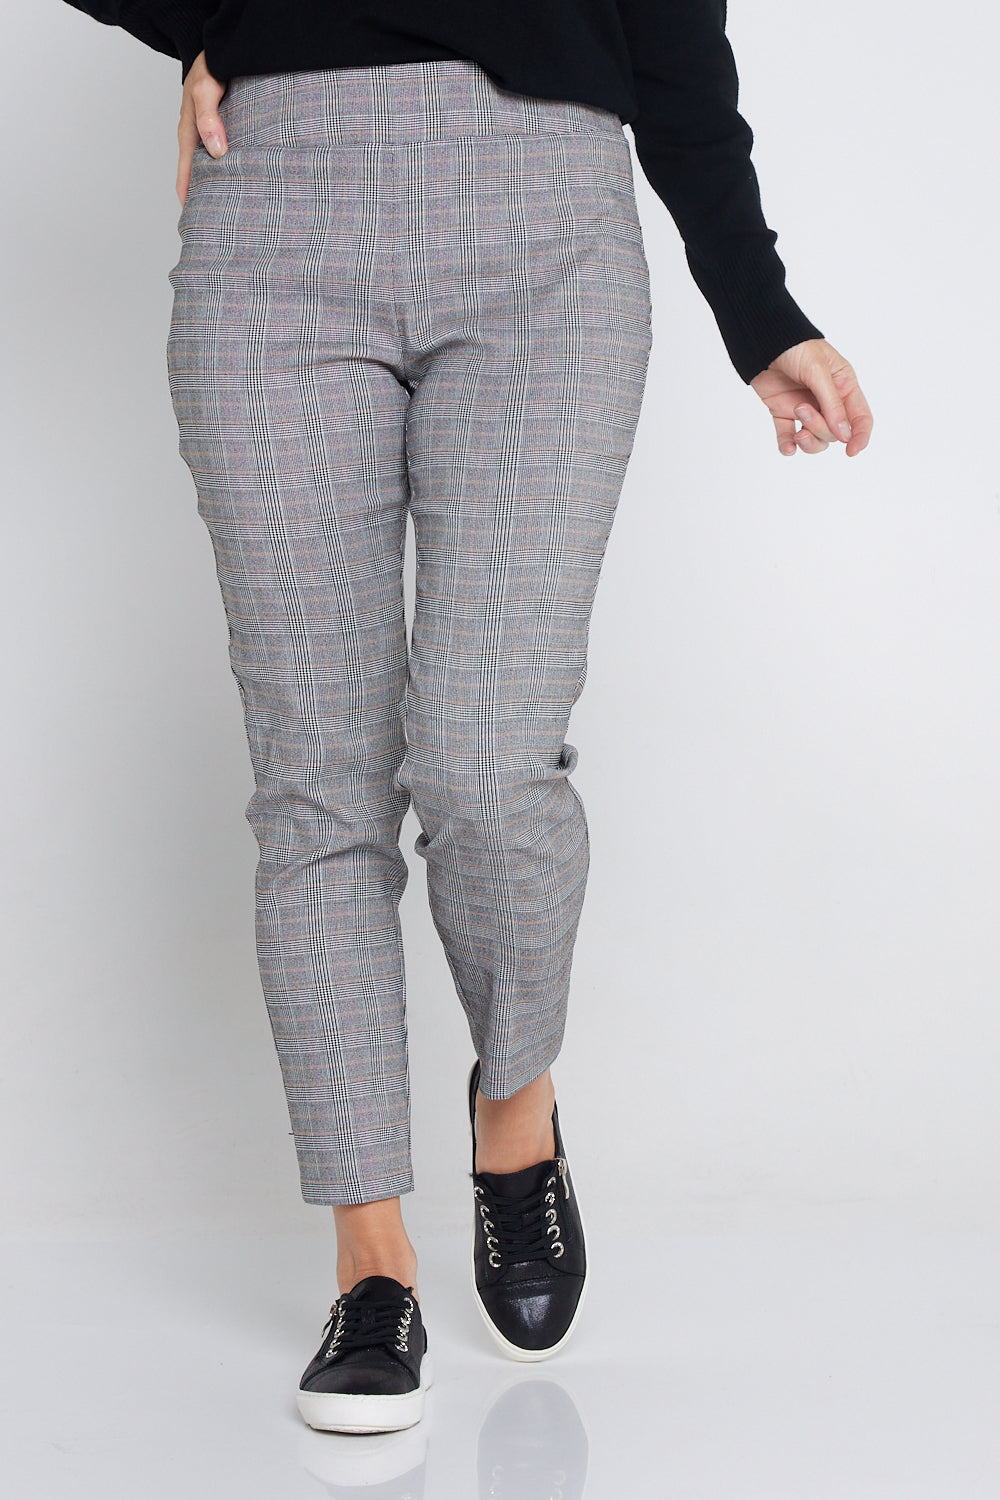 Moira Pants - Grey Check